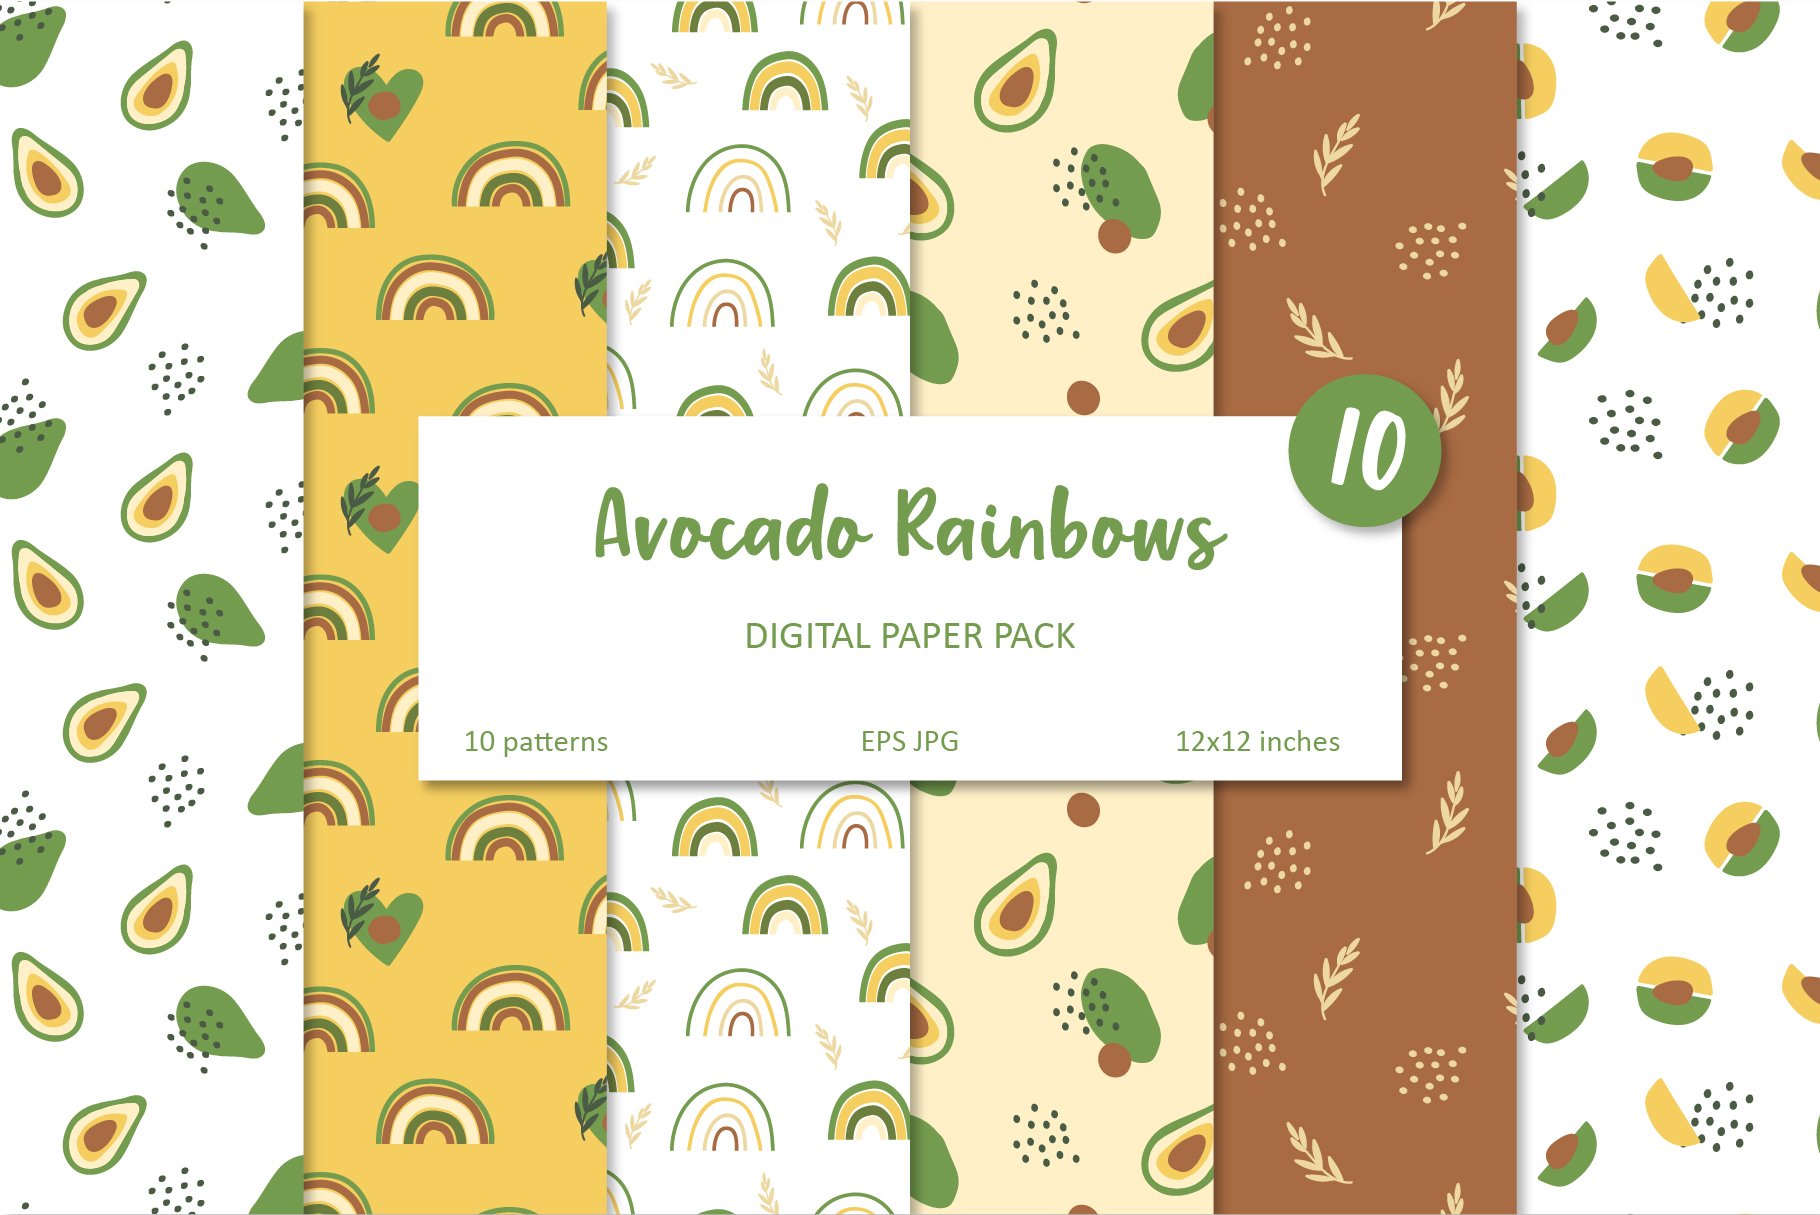 Set of Avocado Rainbow patterns cover image.